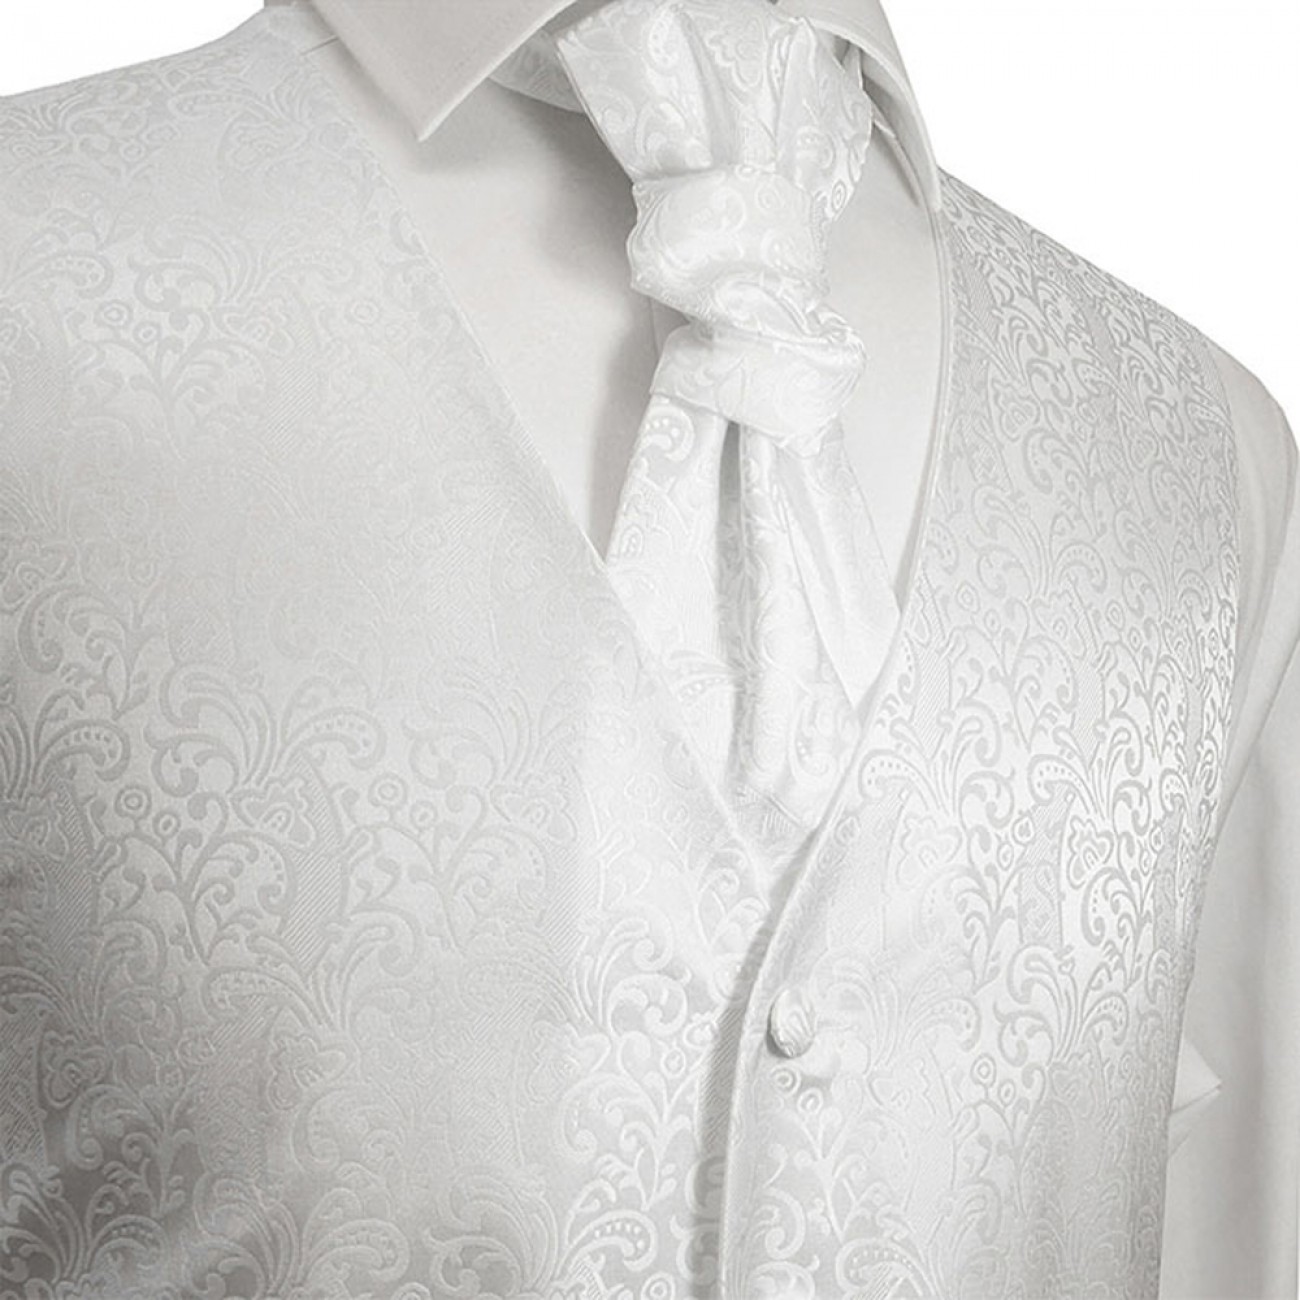 WEDDING/DRESS/SUIT/PARTY TARPORLEY WHITE WAISTCOAT BY HEIRLOOM W-481 